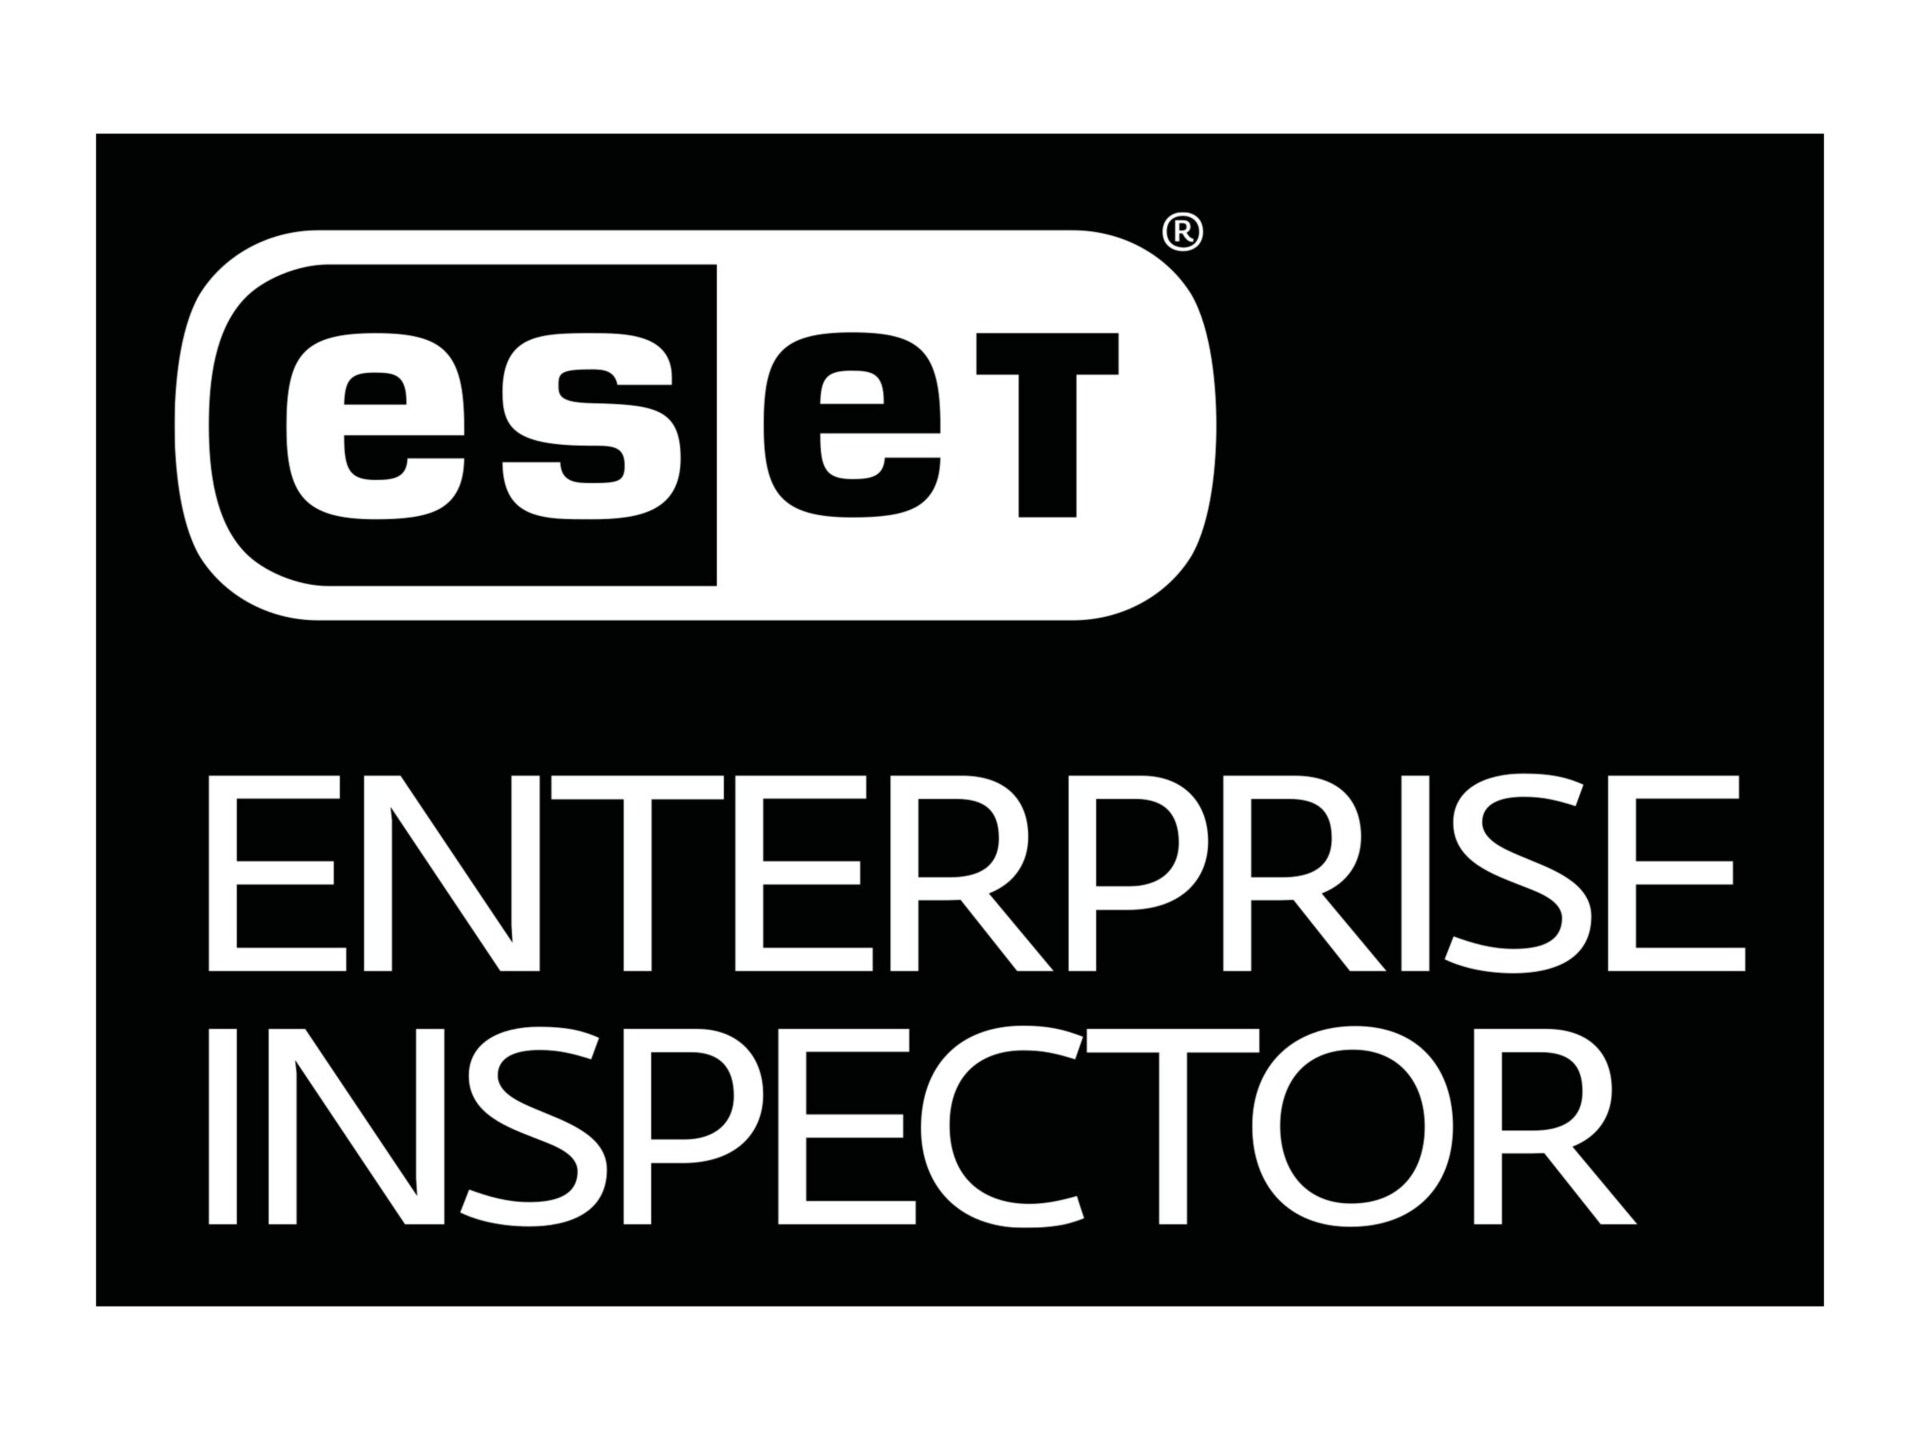 ESET Enterprise Inspector - subscription license (1 year) - 1 seat